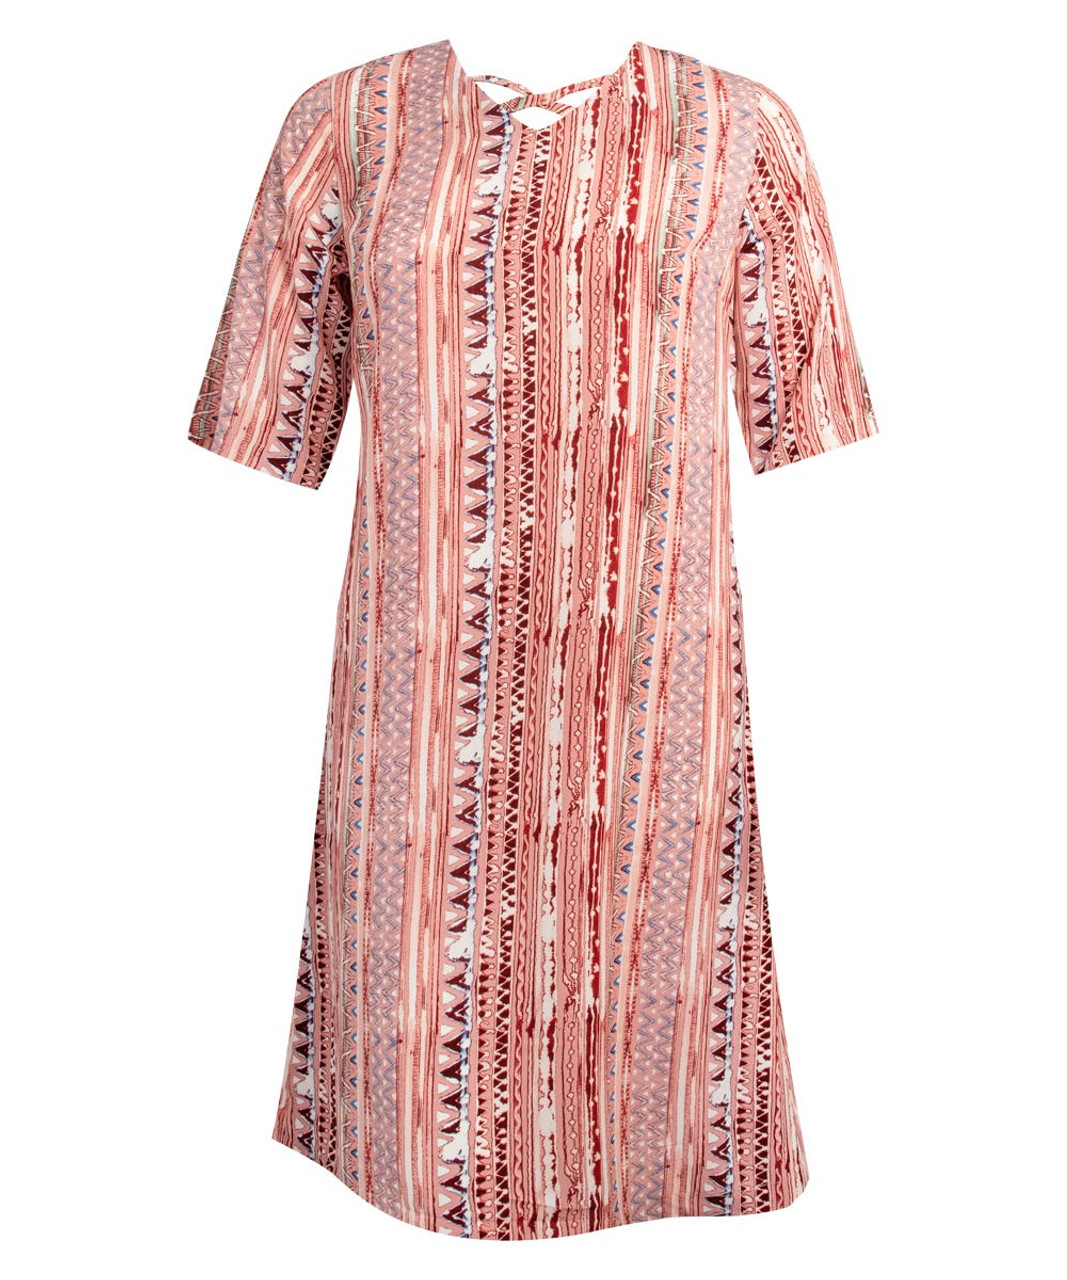 Silverts SV21180 Womens Decorative Neck Adaptive Dress Blush, Size=S, SV21180-S50020-S